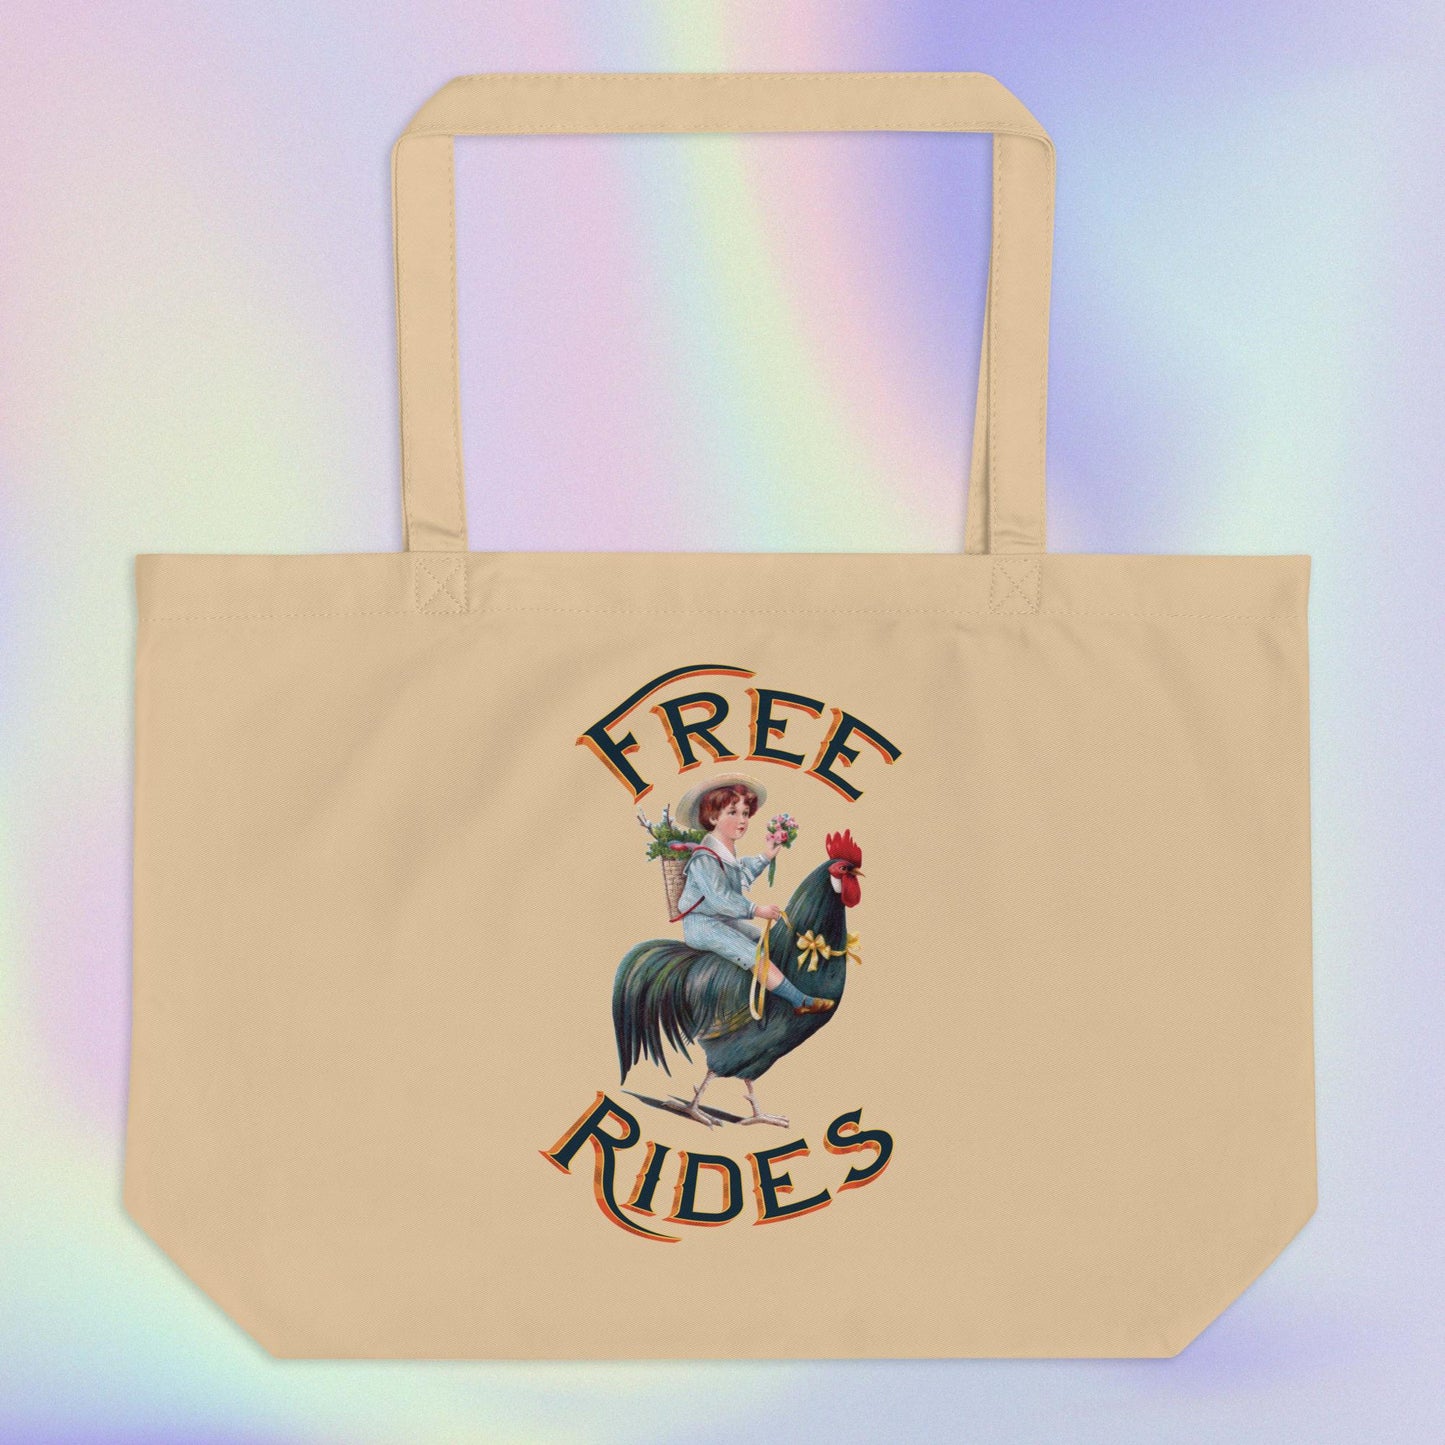 Free rides - Rooster - Large organic tote bag